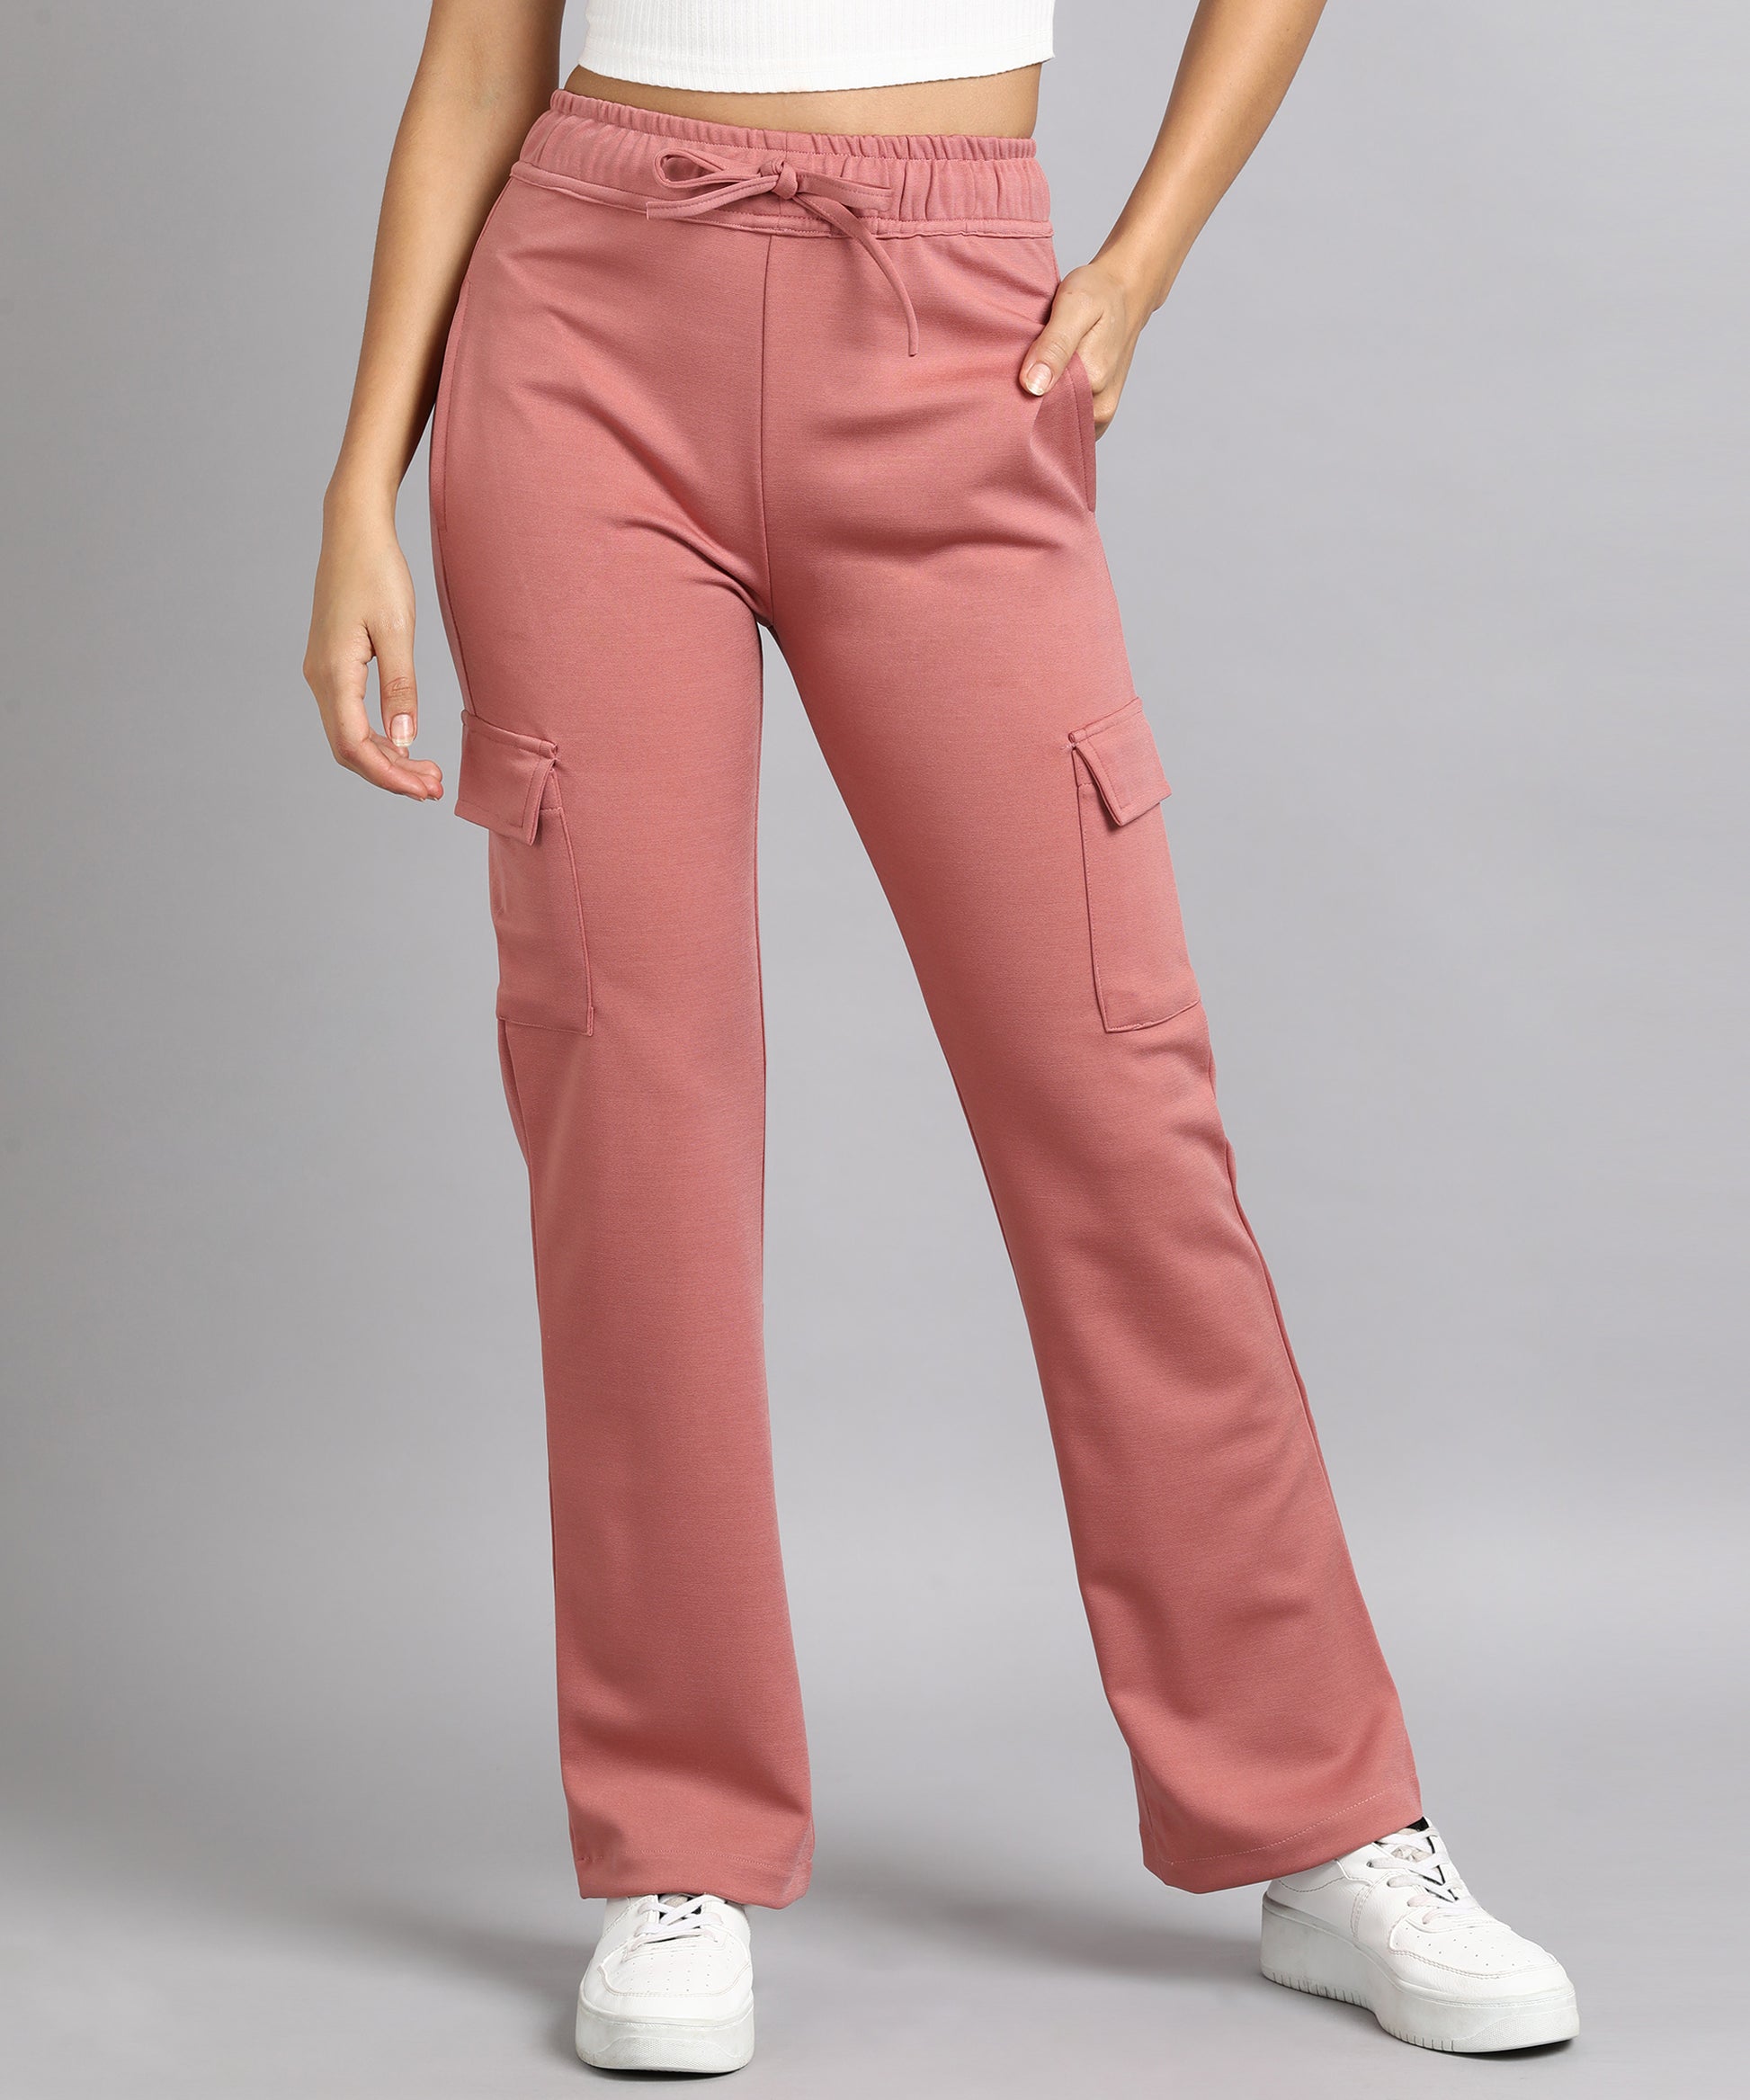 Cargo Pants Women Pink Color, Cargo Pants High Waist Pink